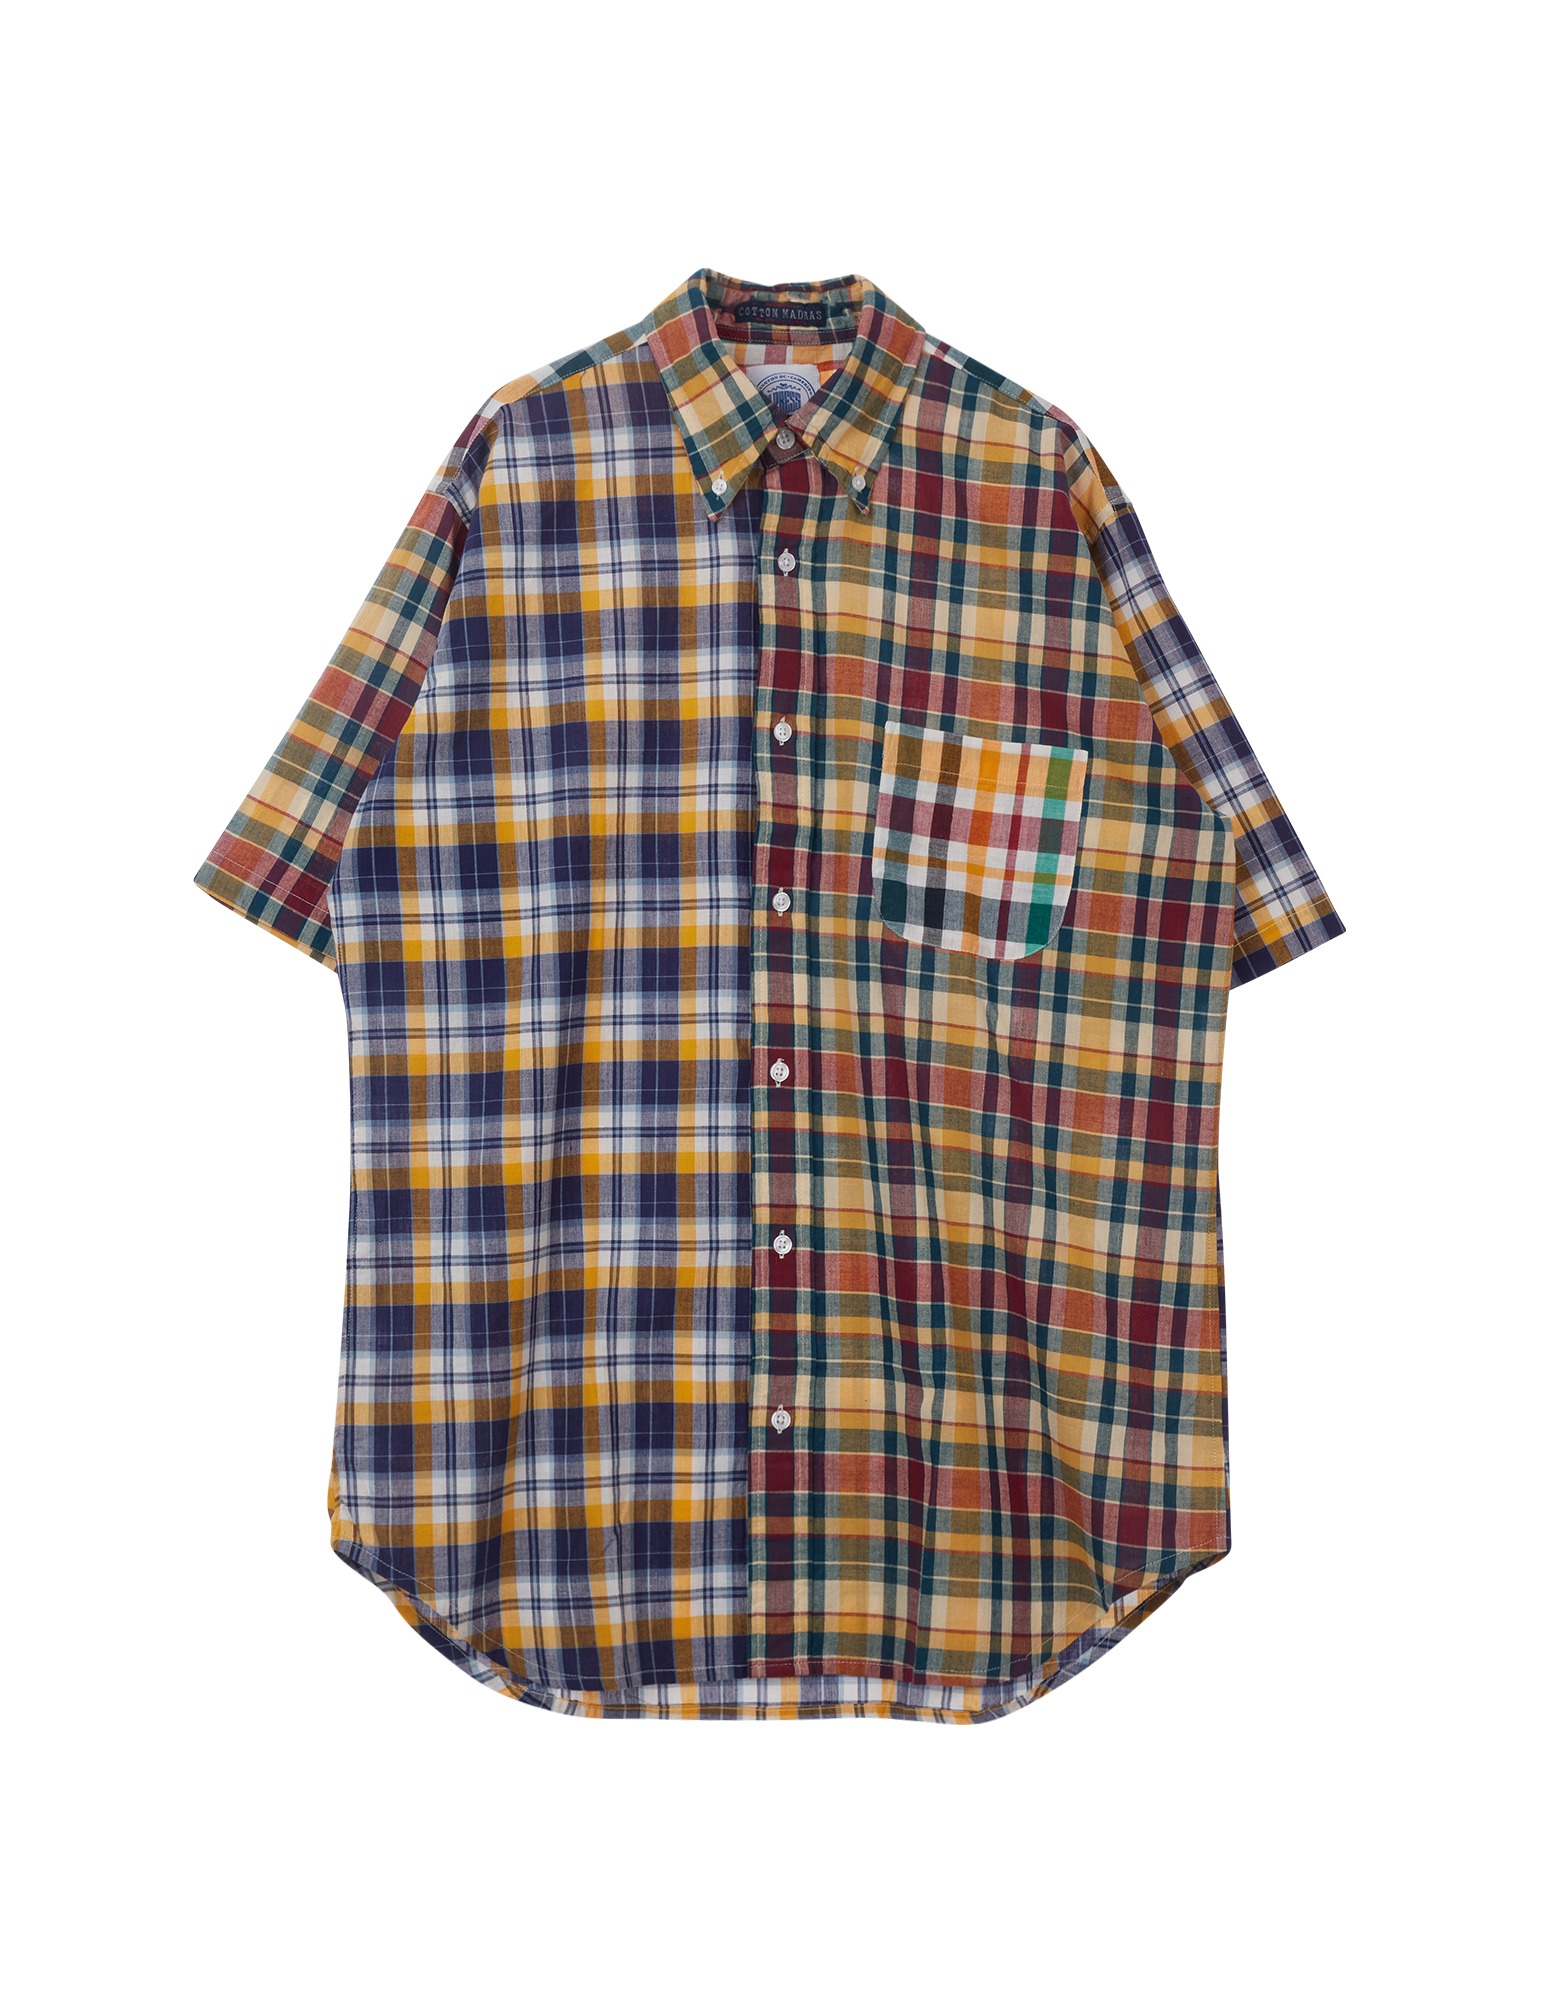 Madras Short Sleeve Shirt (Multi)